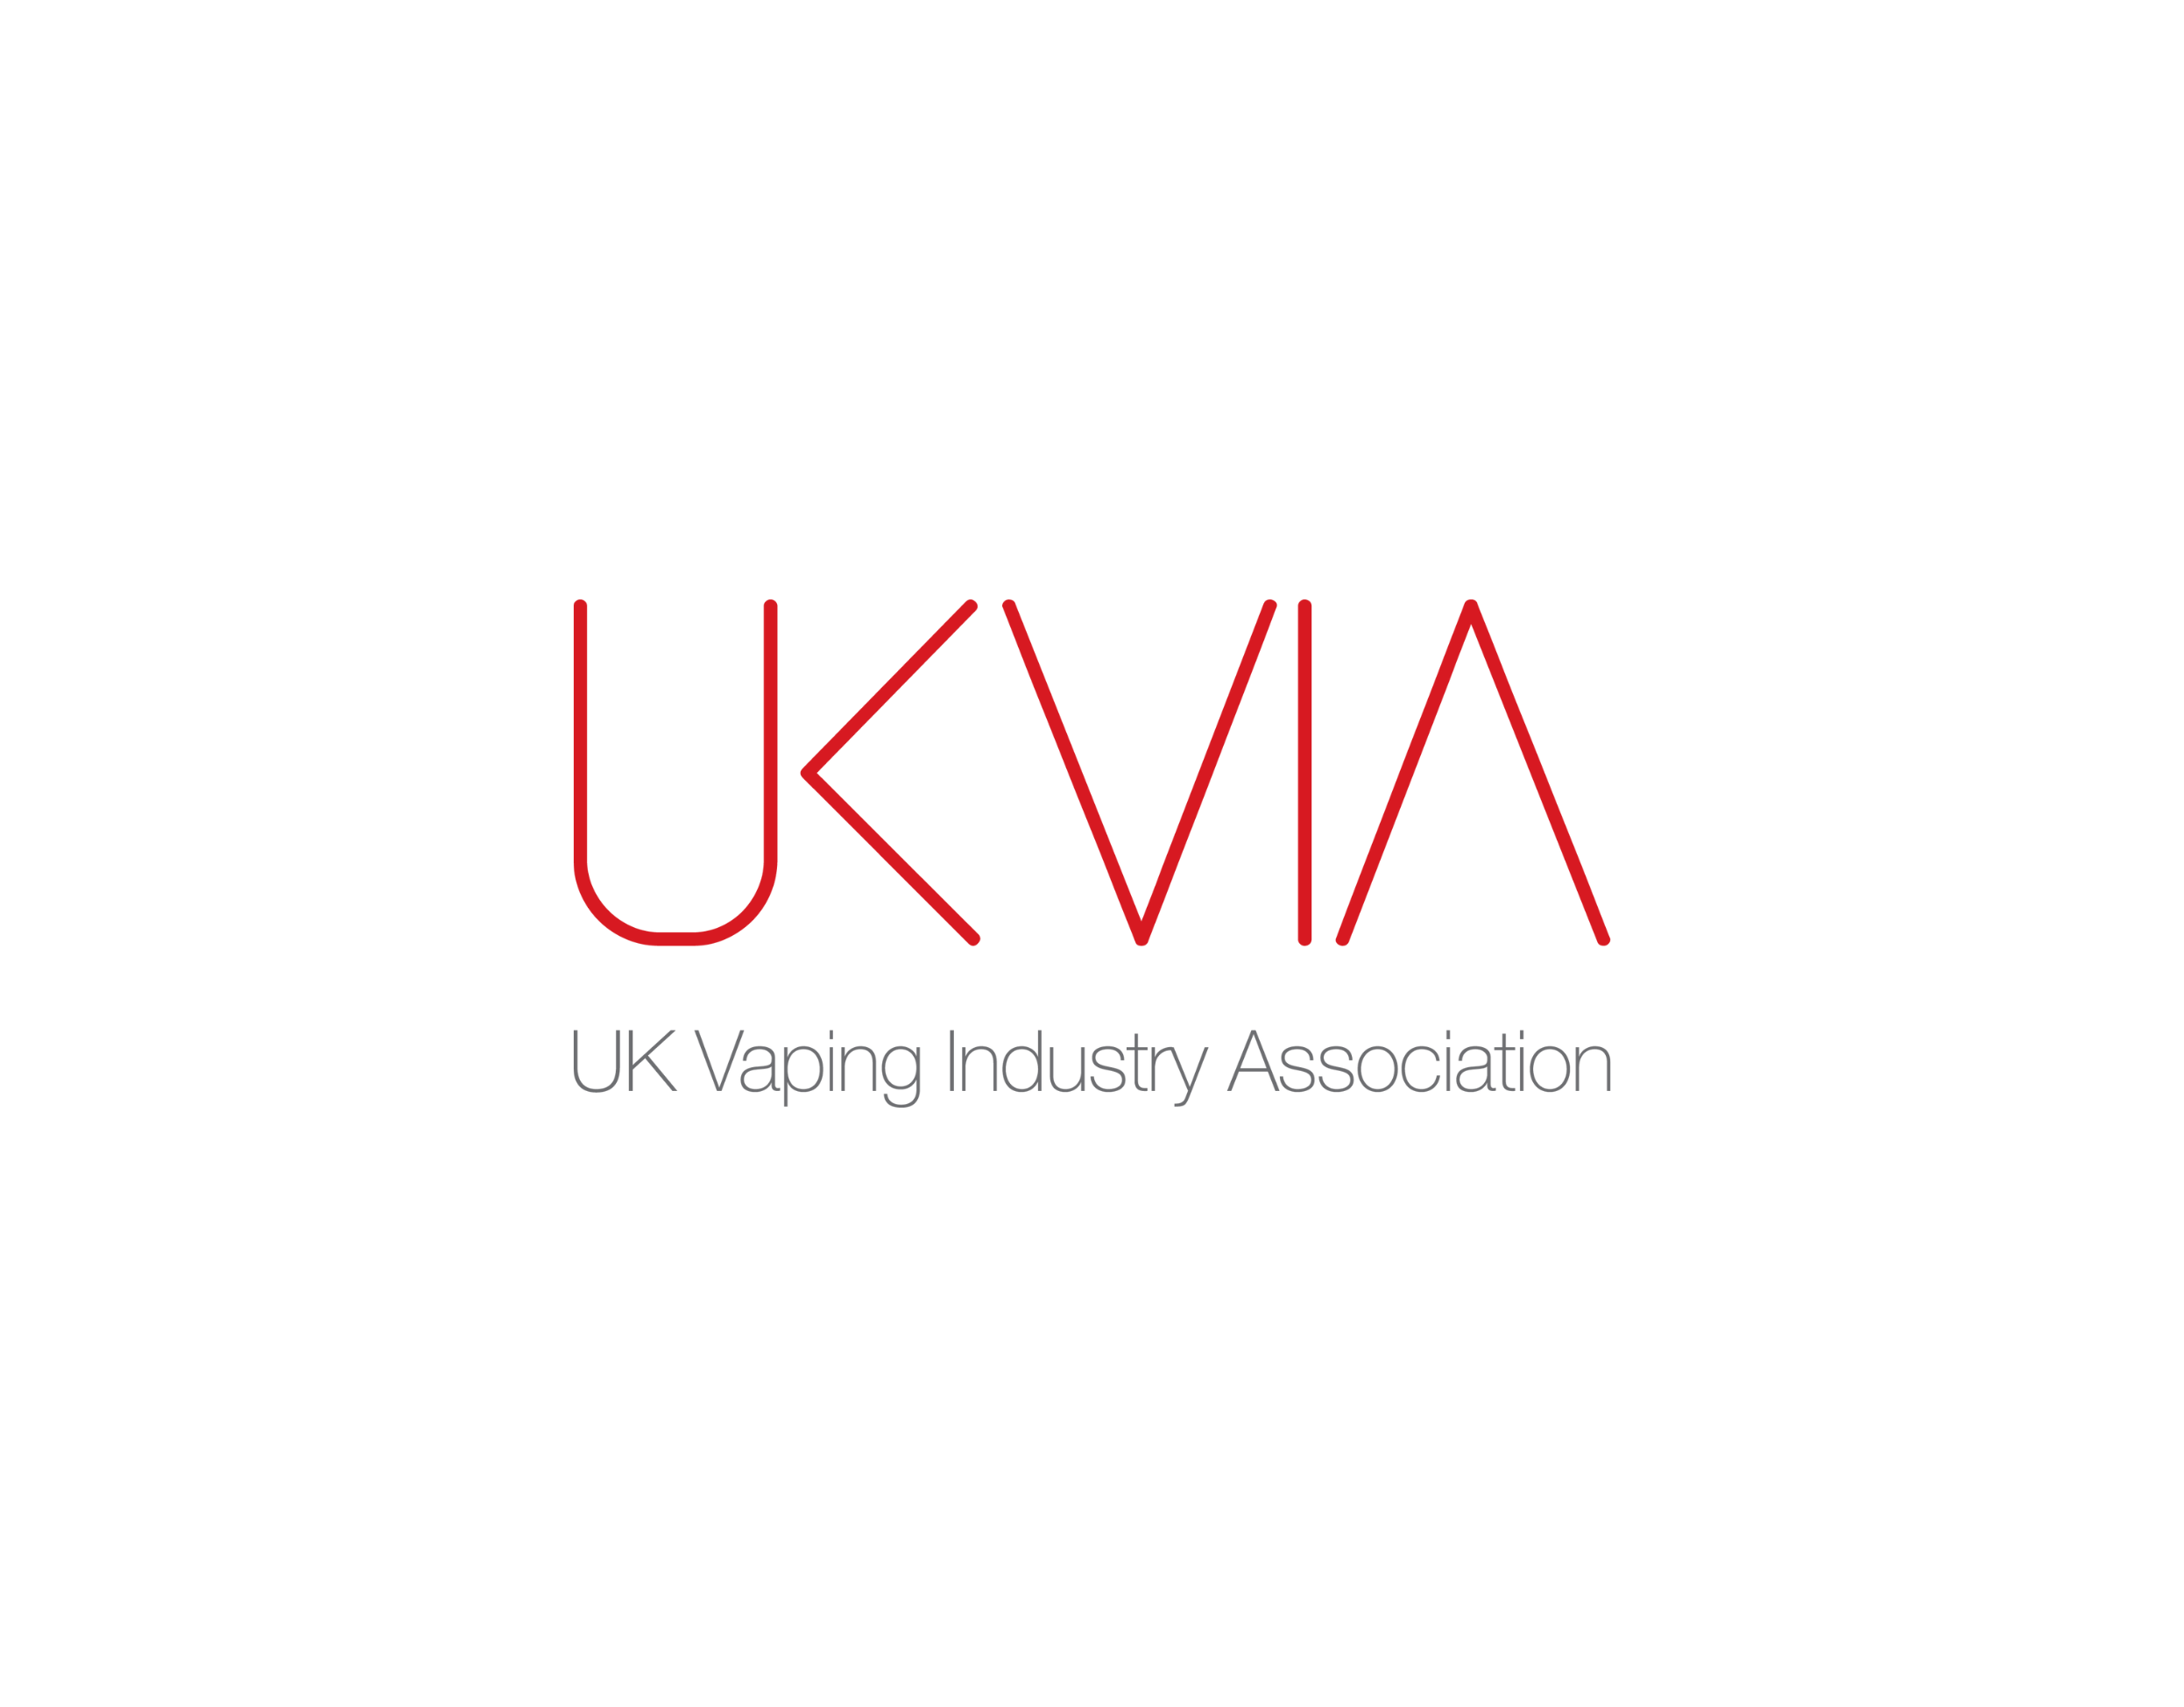 UKVIA-(UK-Vaping-Industry-Association)